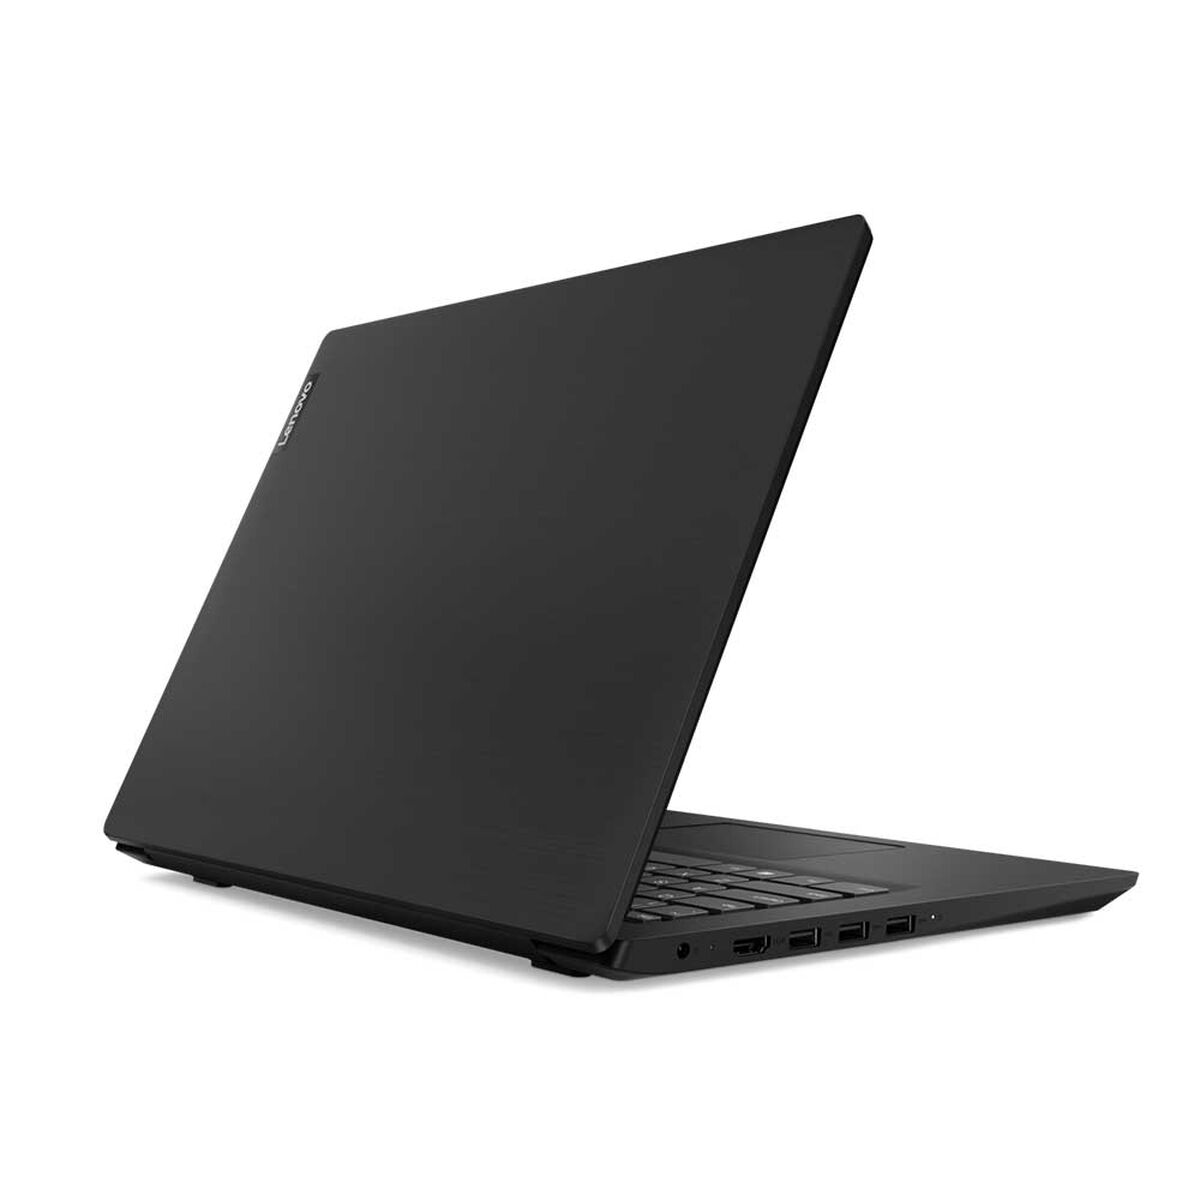 Notebook Lenovo Ideapad S145 Ryzen 3 8GB 256GB SSD 14"